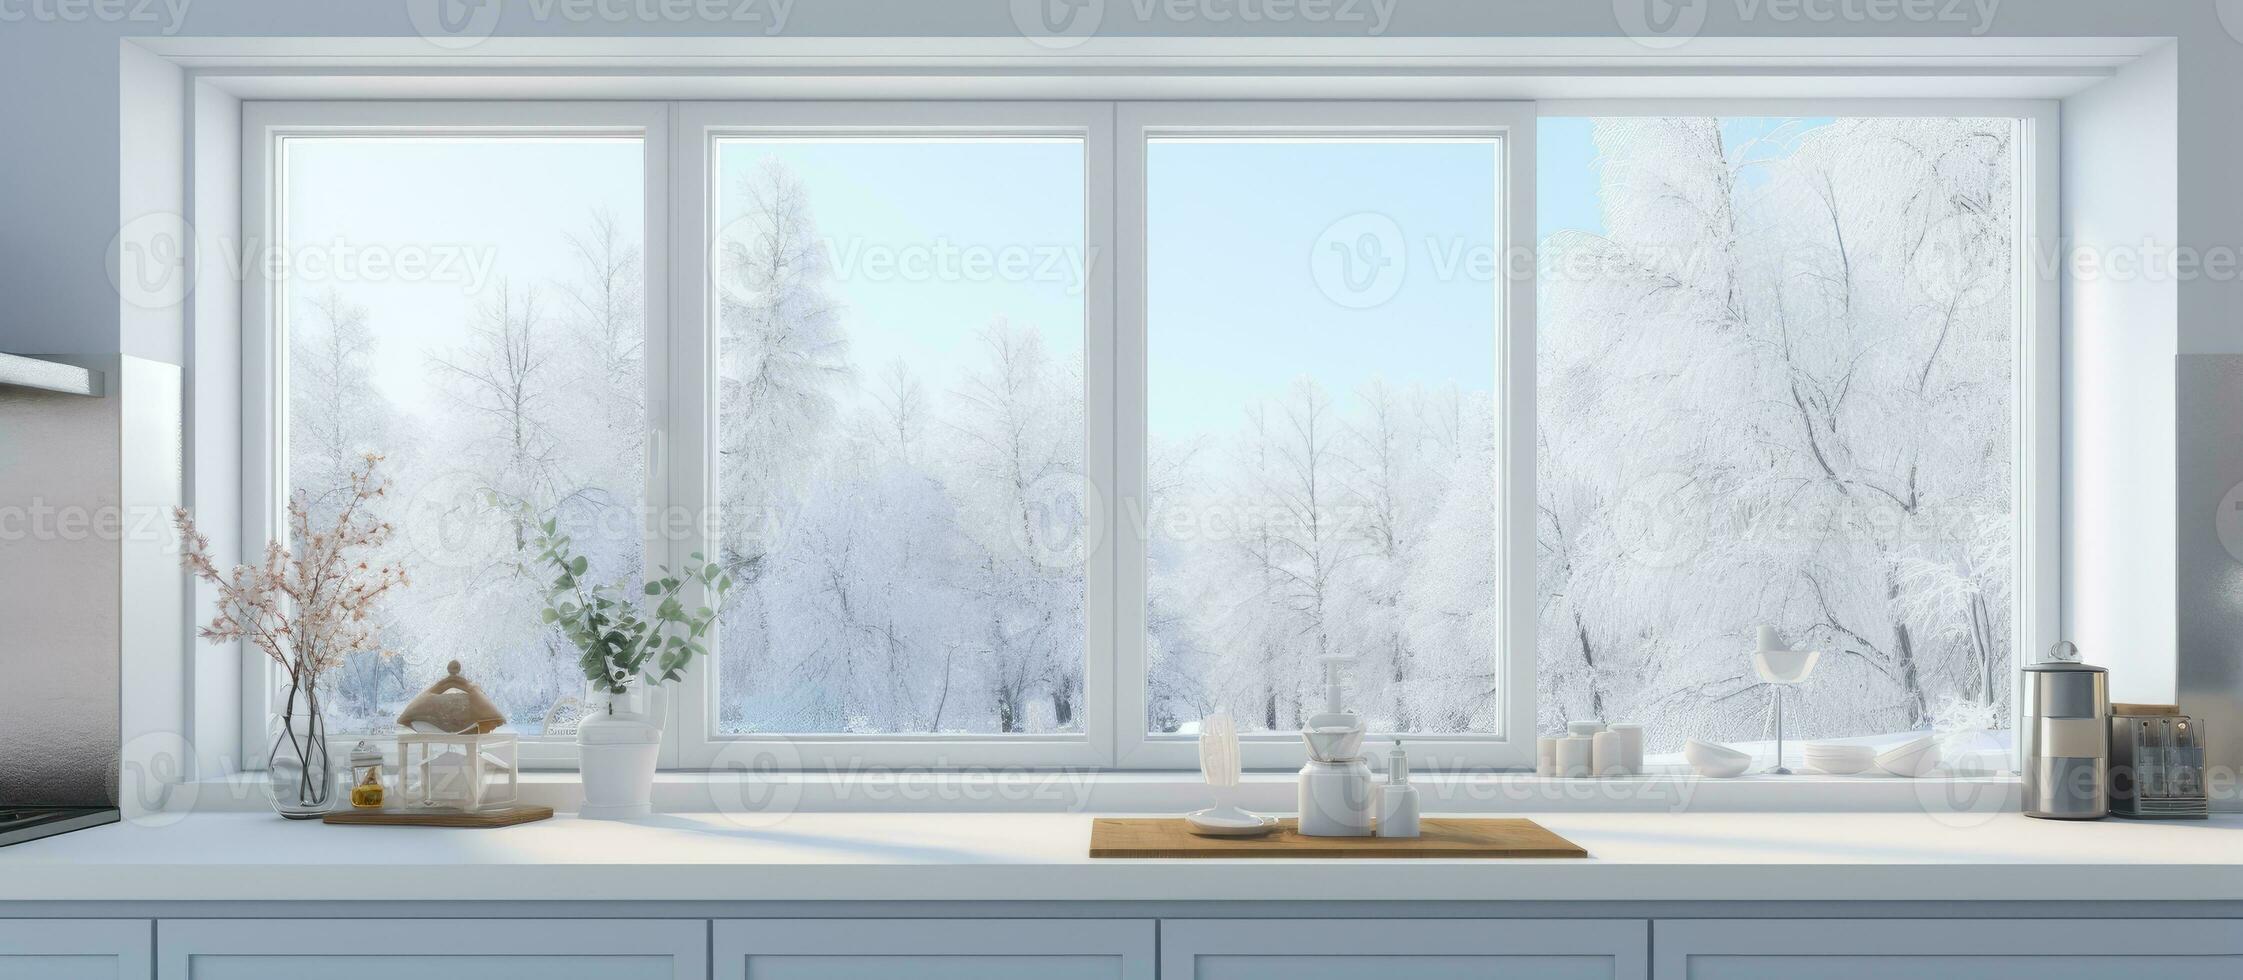 contemporáneo ventana ver de cocina foto